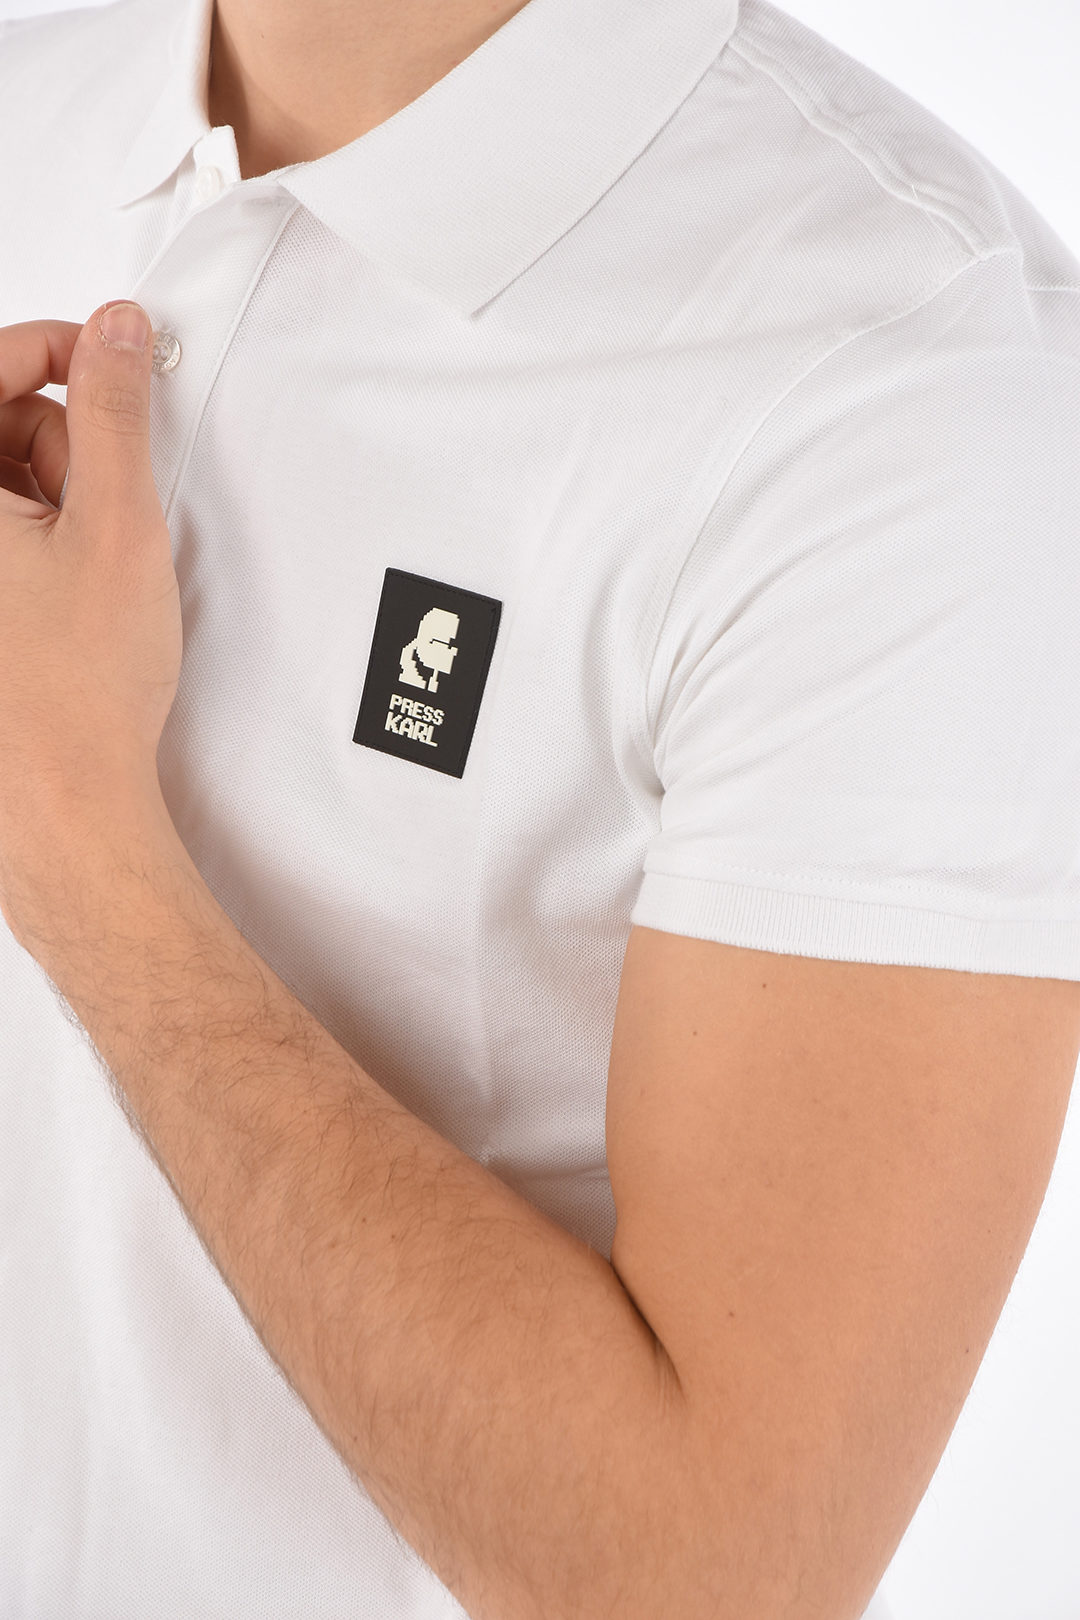 Nylon Beer Goot Karl Lagerfeld stretch cotton 2 button polo shirt men - Glamood Outlet